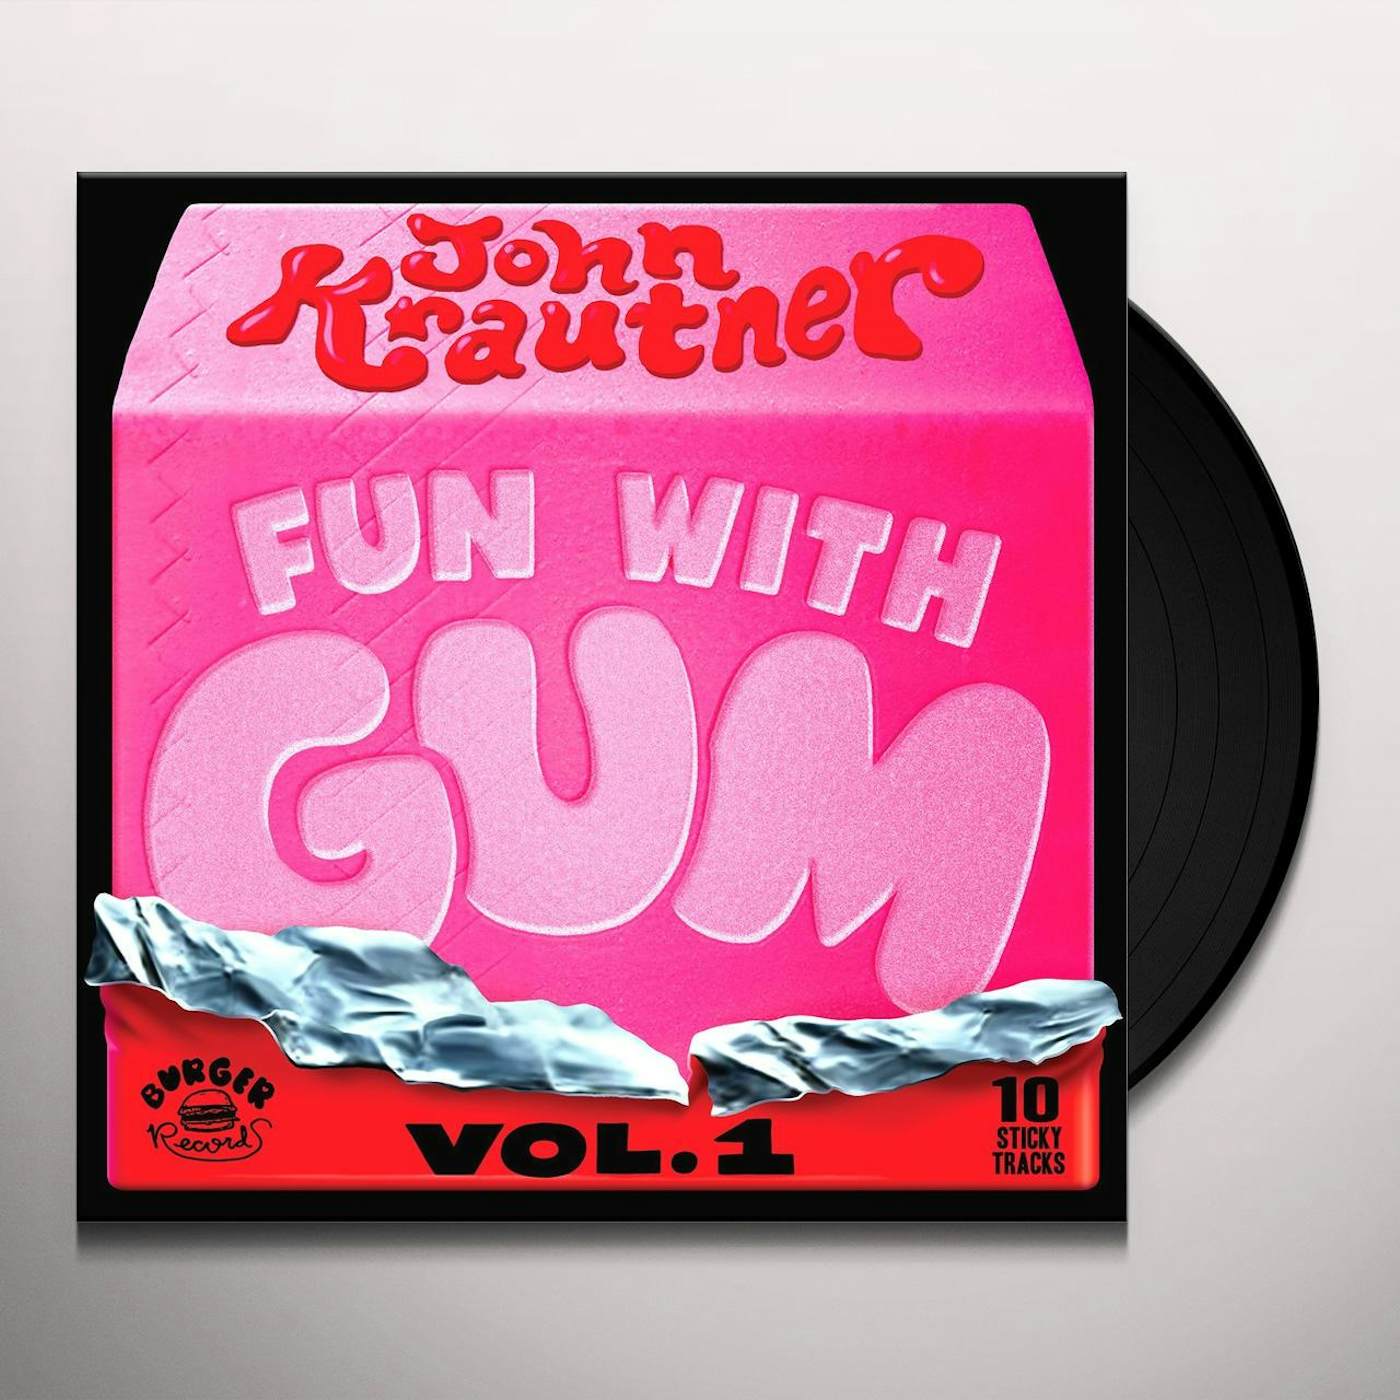 John Krautner FUN WITH GUM 1 Vinyl Record - Digital Download Included